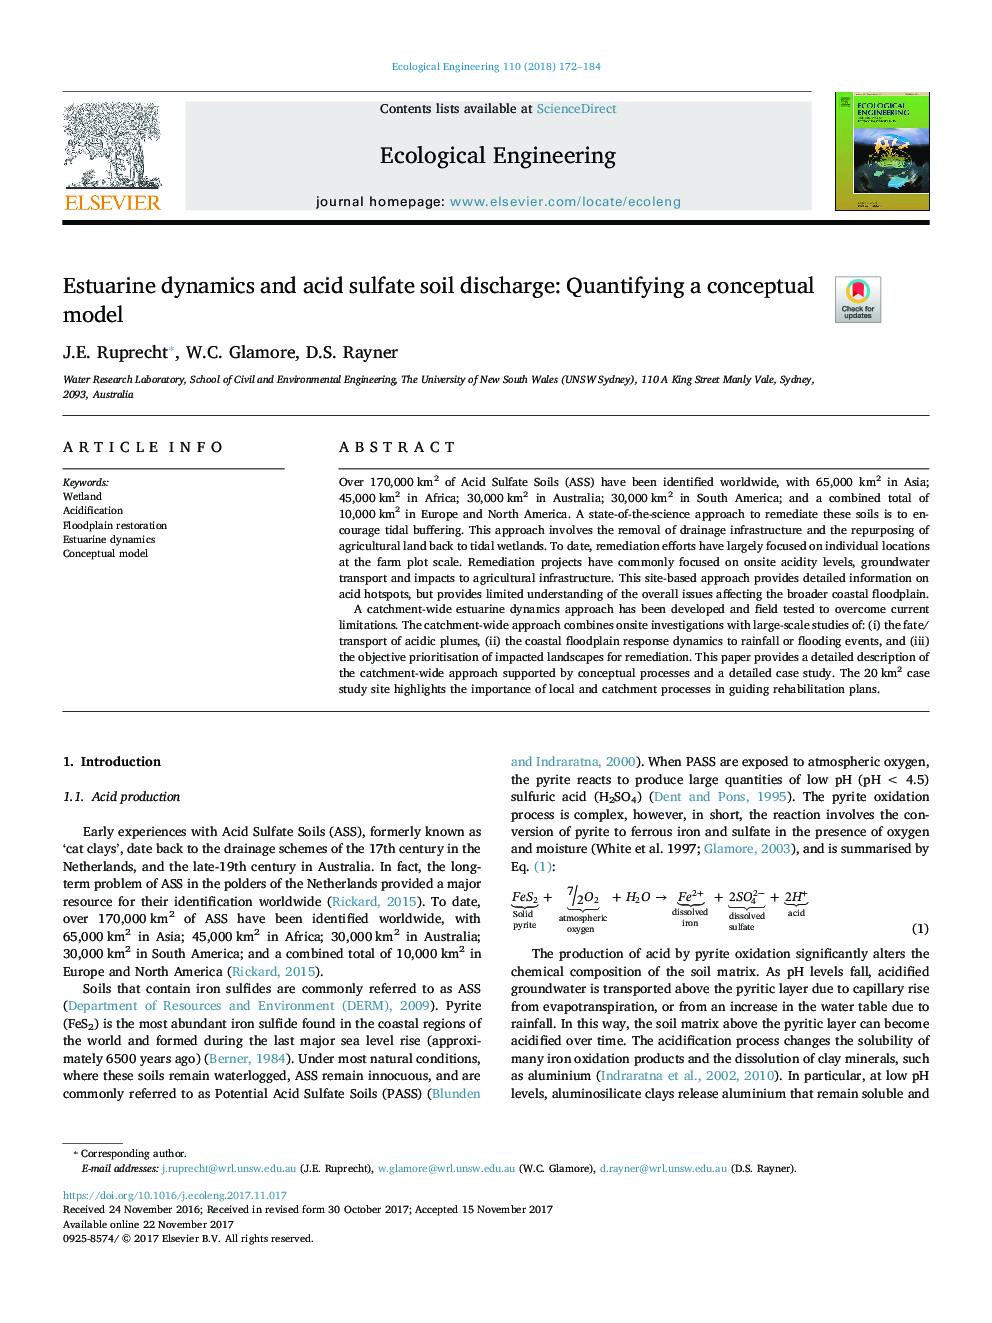 Estuarine dynamics and acid sulfate soil discharge: Quantifying a conceptual model